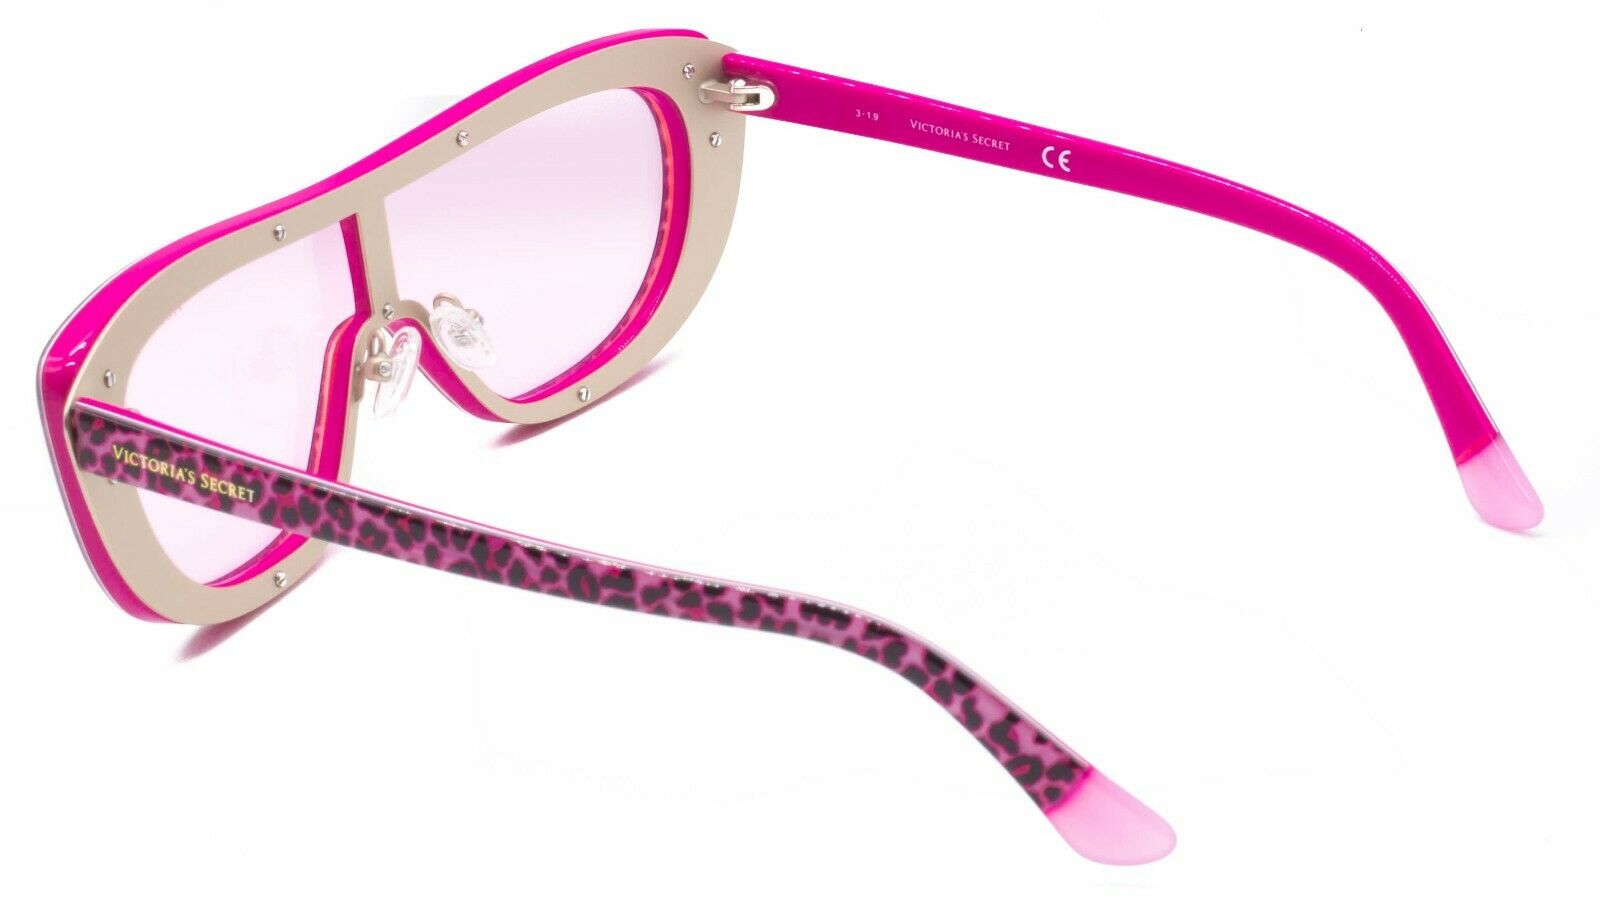 VICTORIA'S SECRET VS0011 77T 128mm Sunglasses Eyewear Shades Frames Glasses New